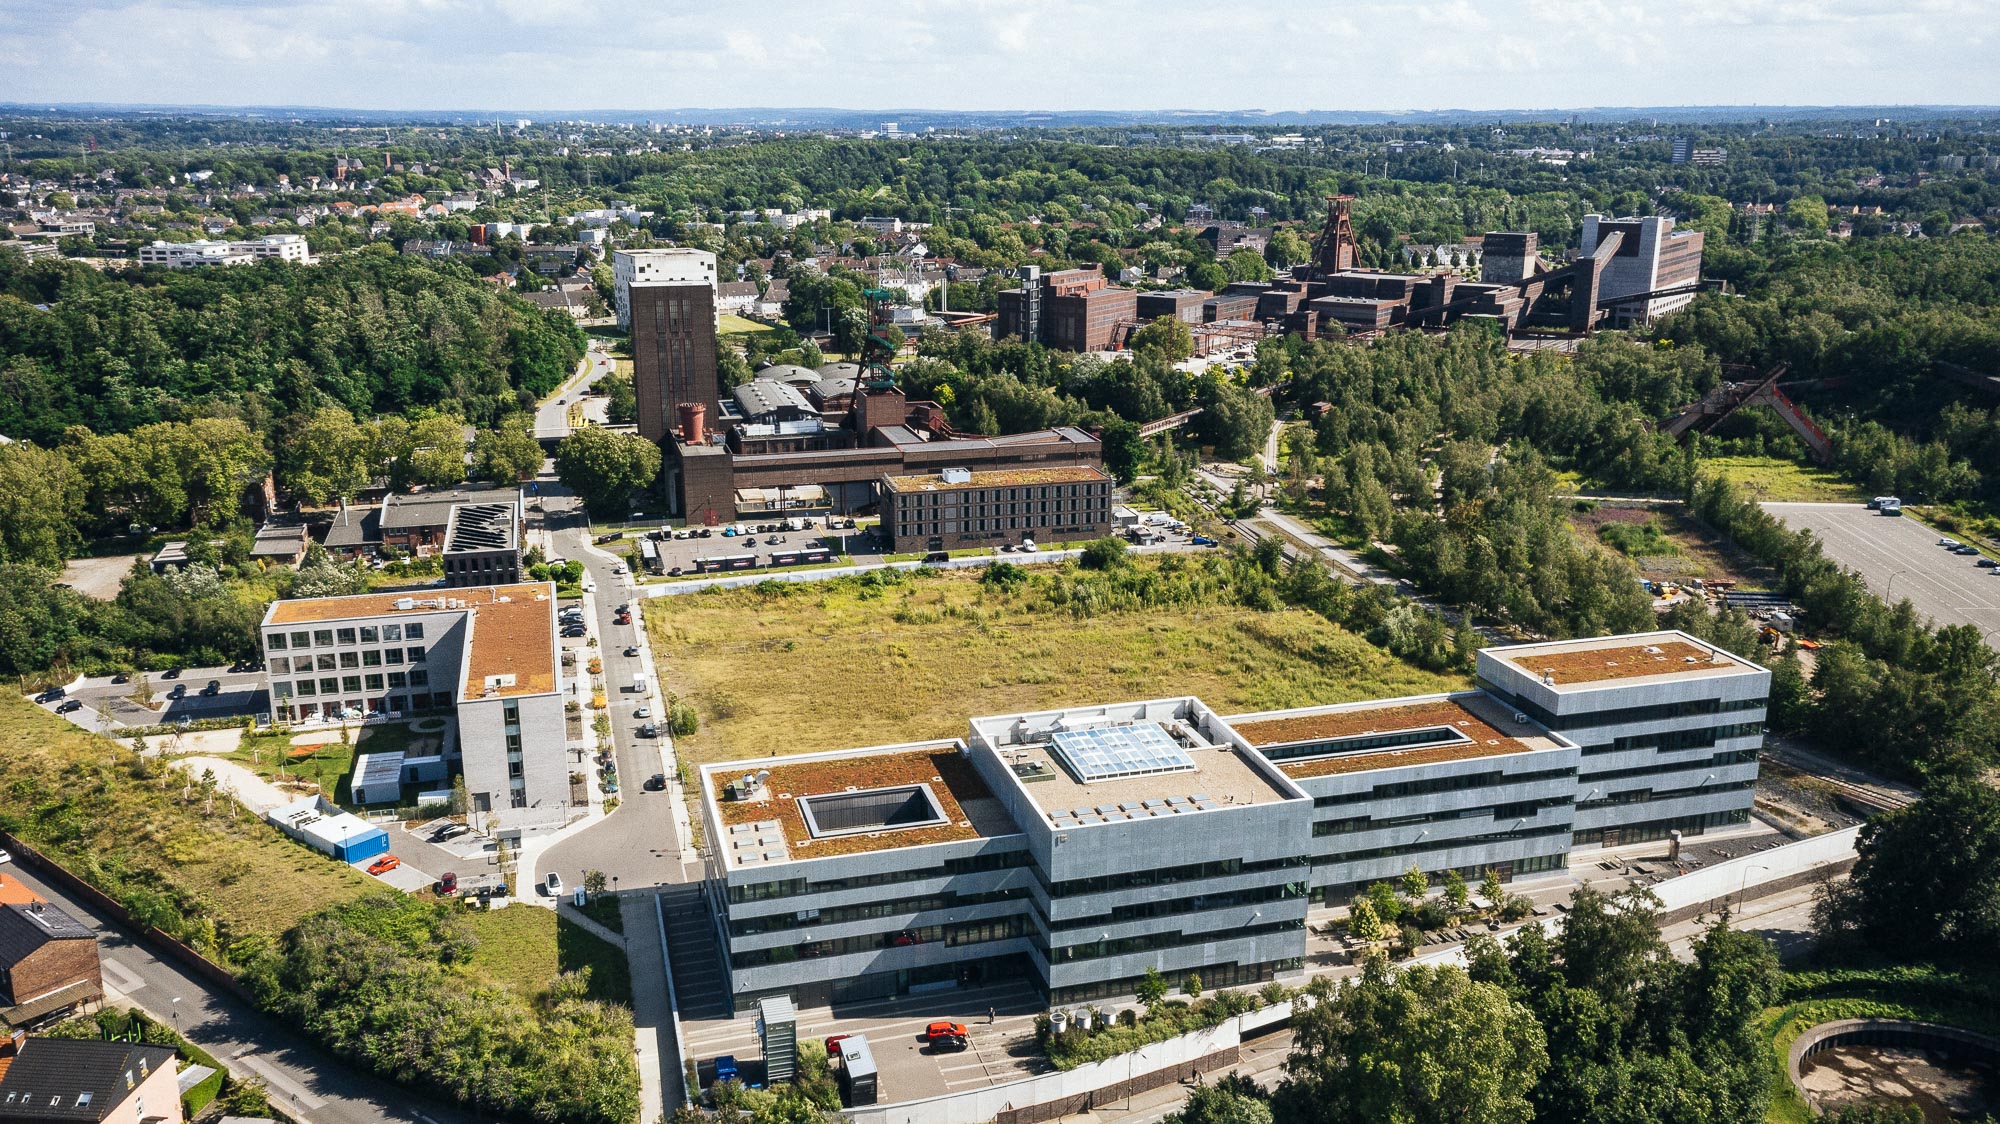 Our university building, Quartier Nord, on UNESCO world heritage campus Zollverein. Photo: Silviu Guiman